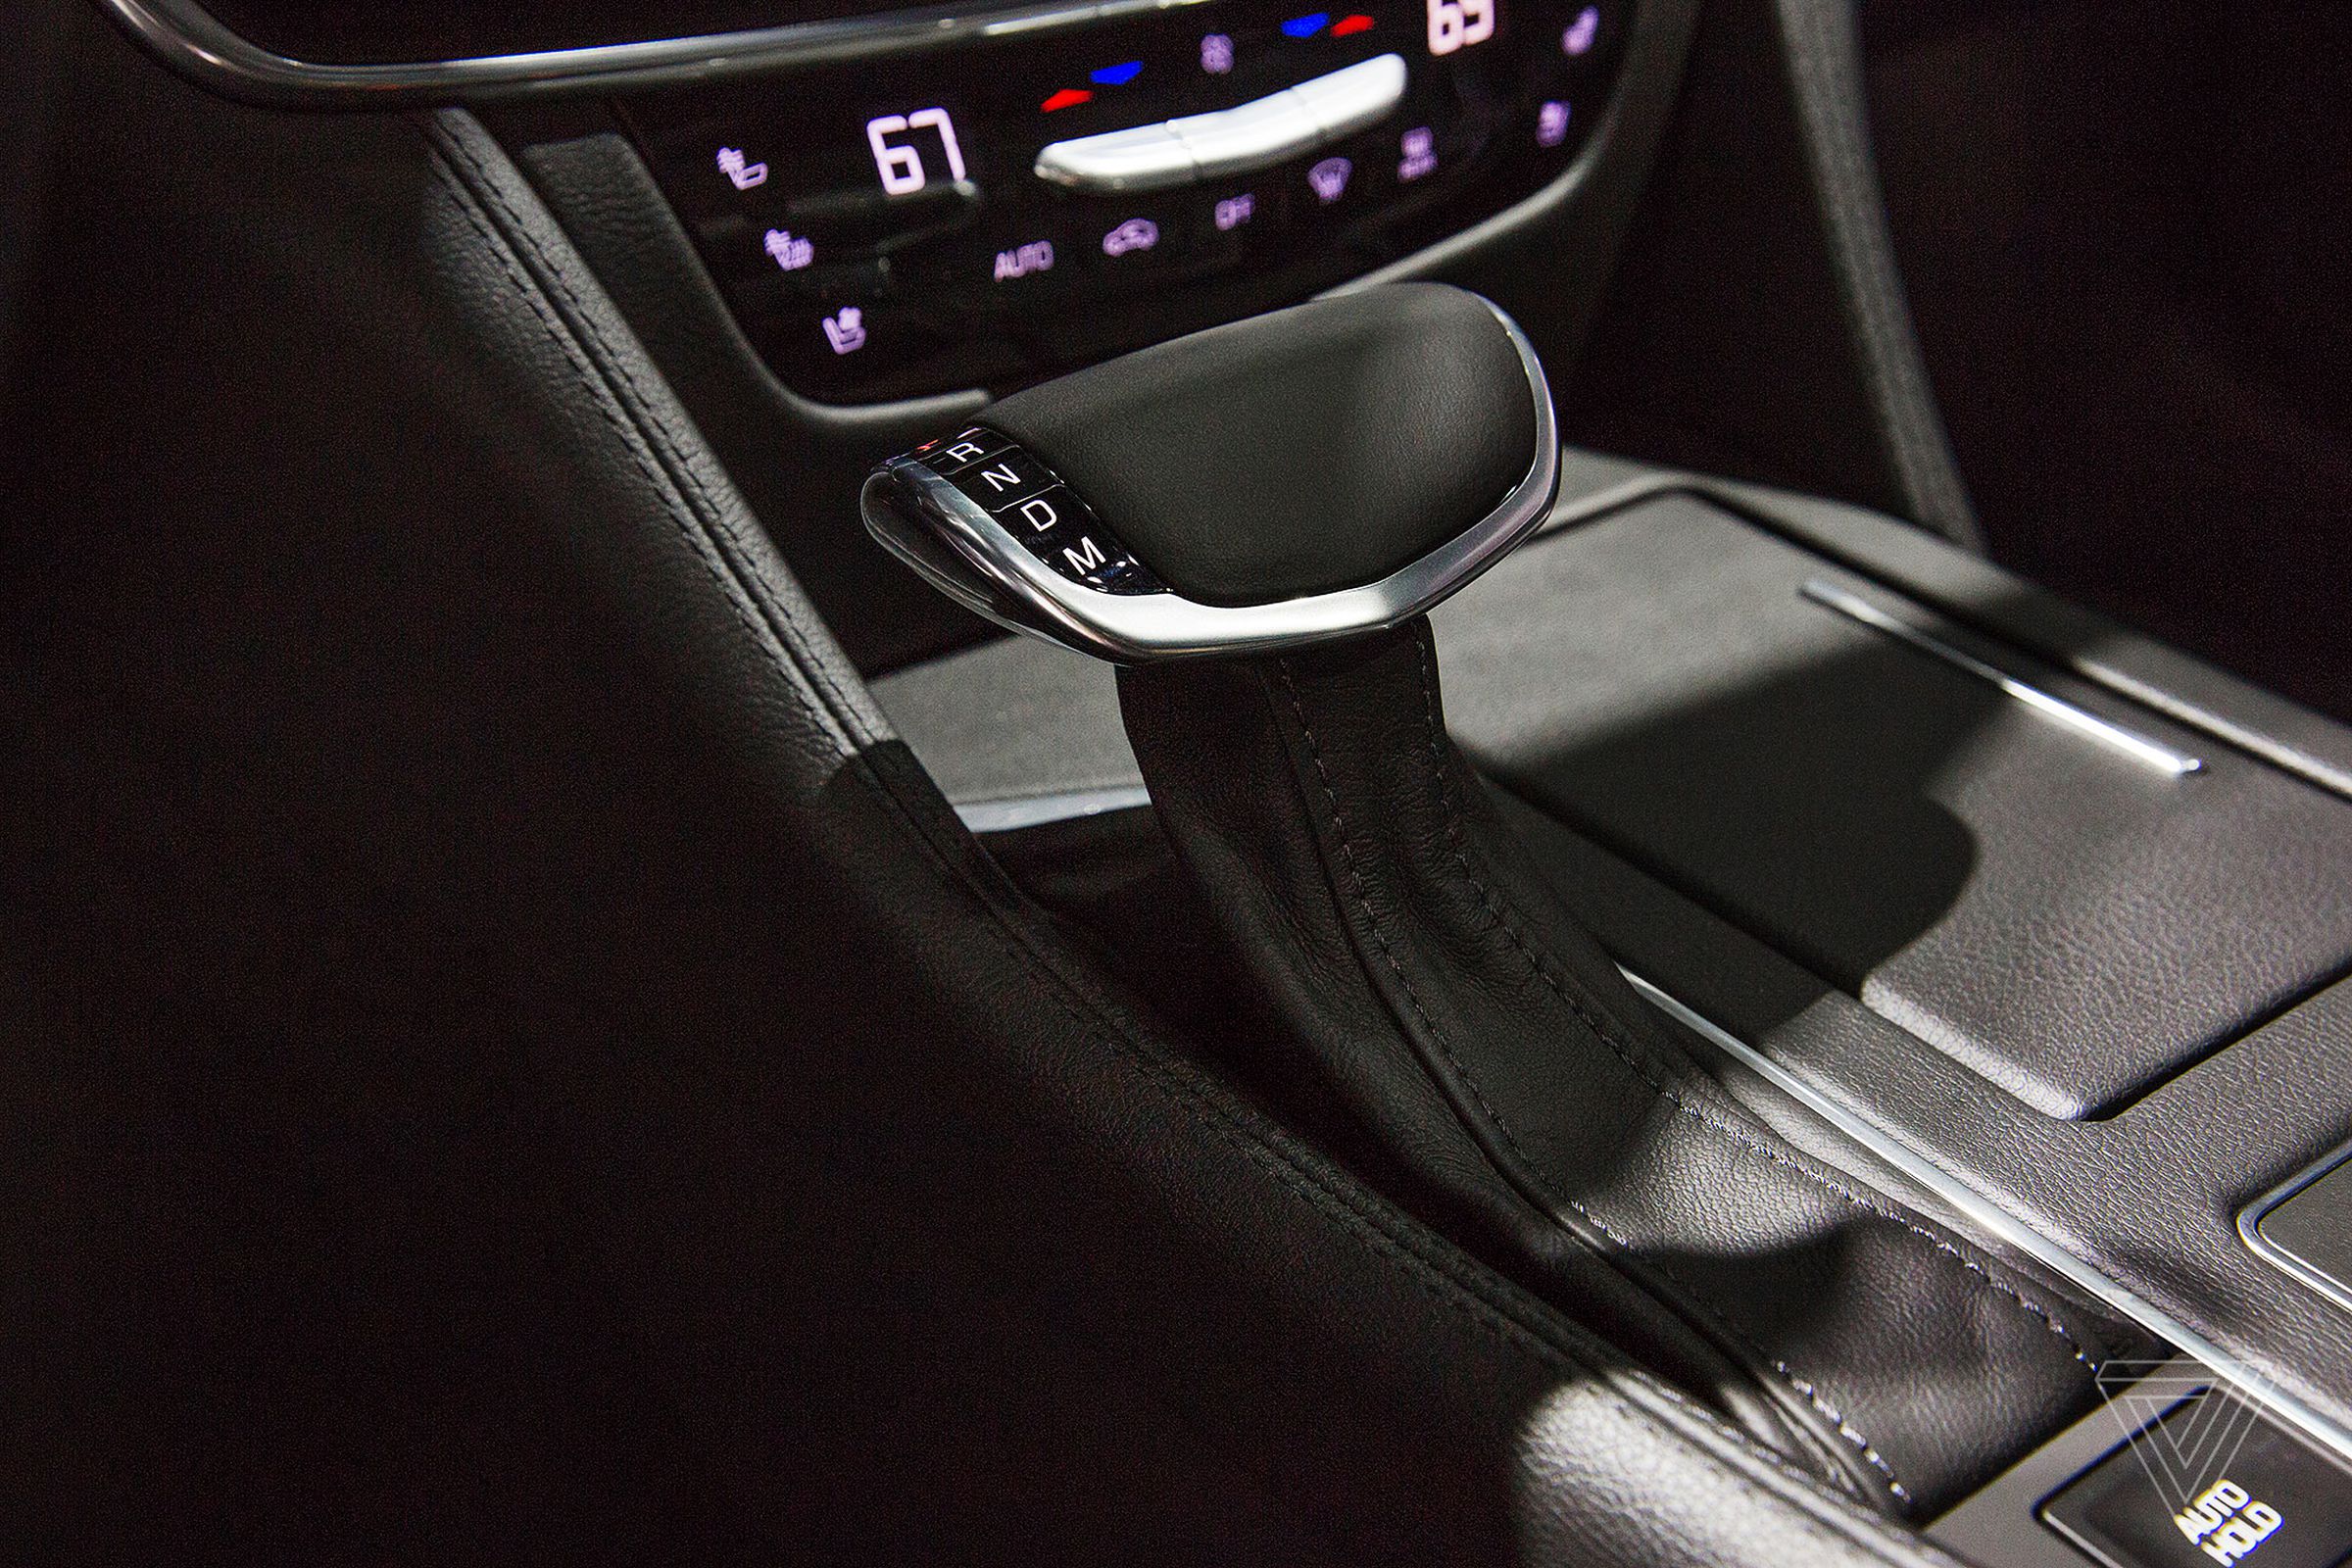 The shifter on the Cadillac Ct6 Plug-in sports a futuristic design.